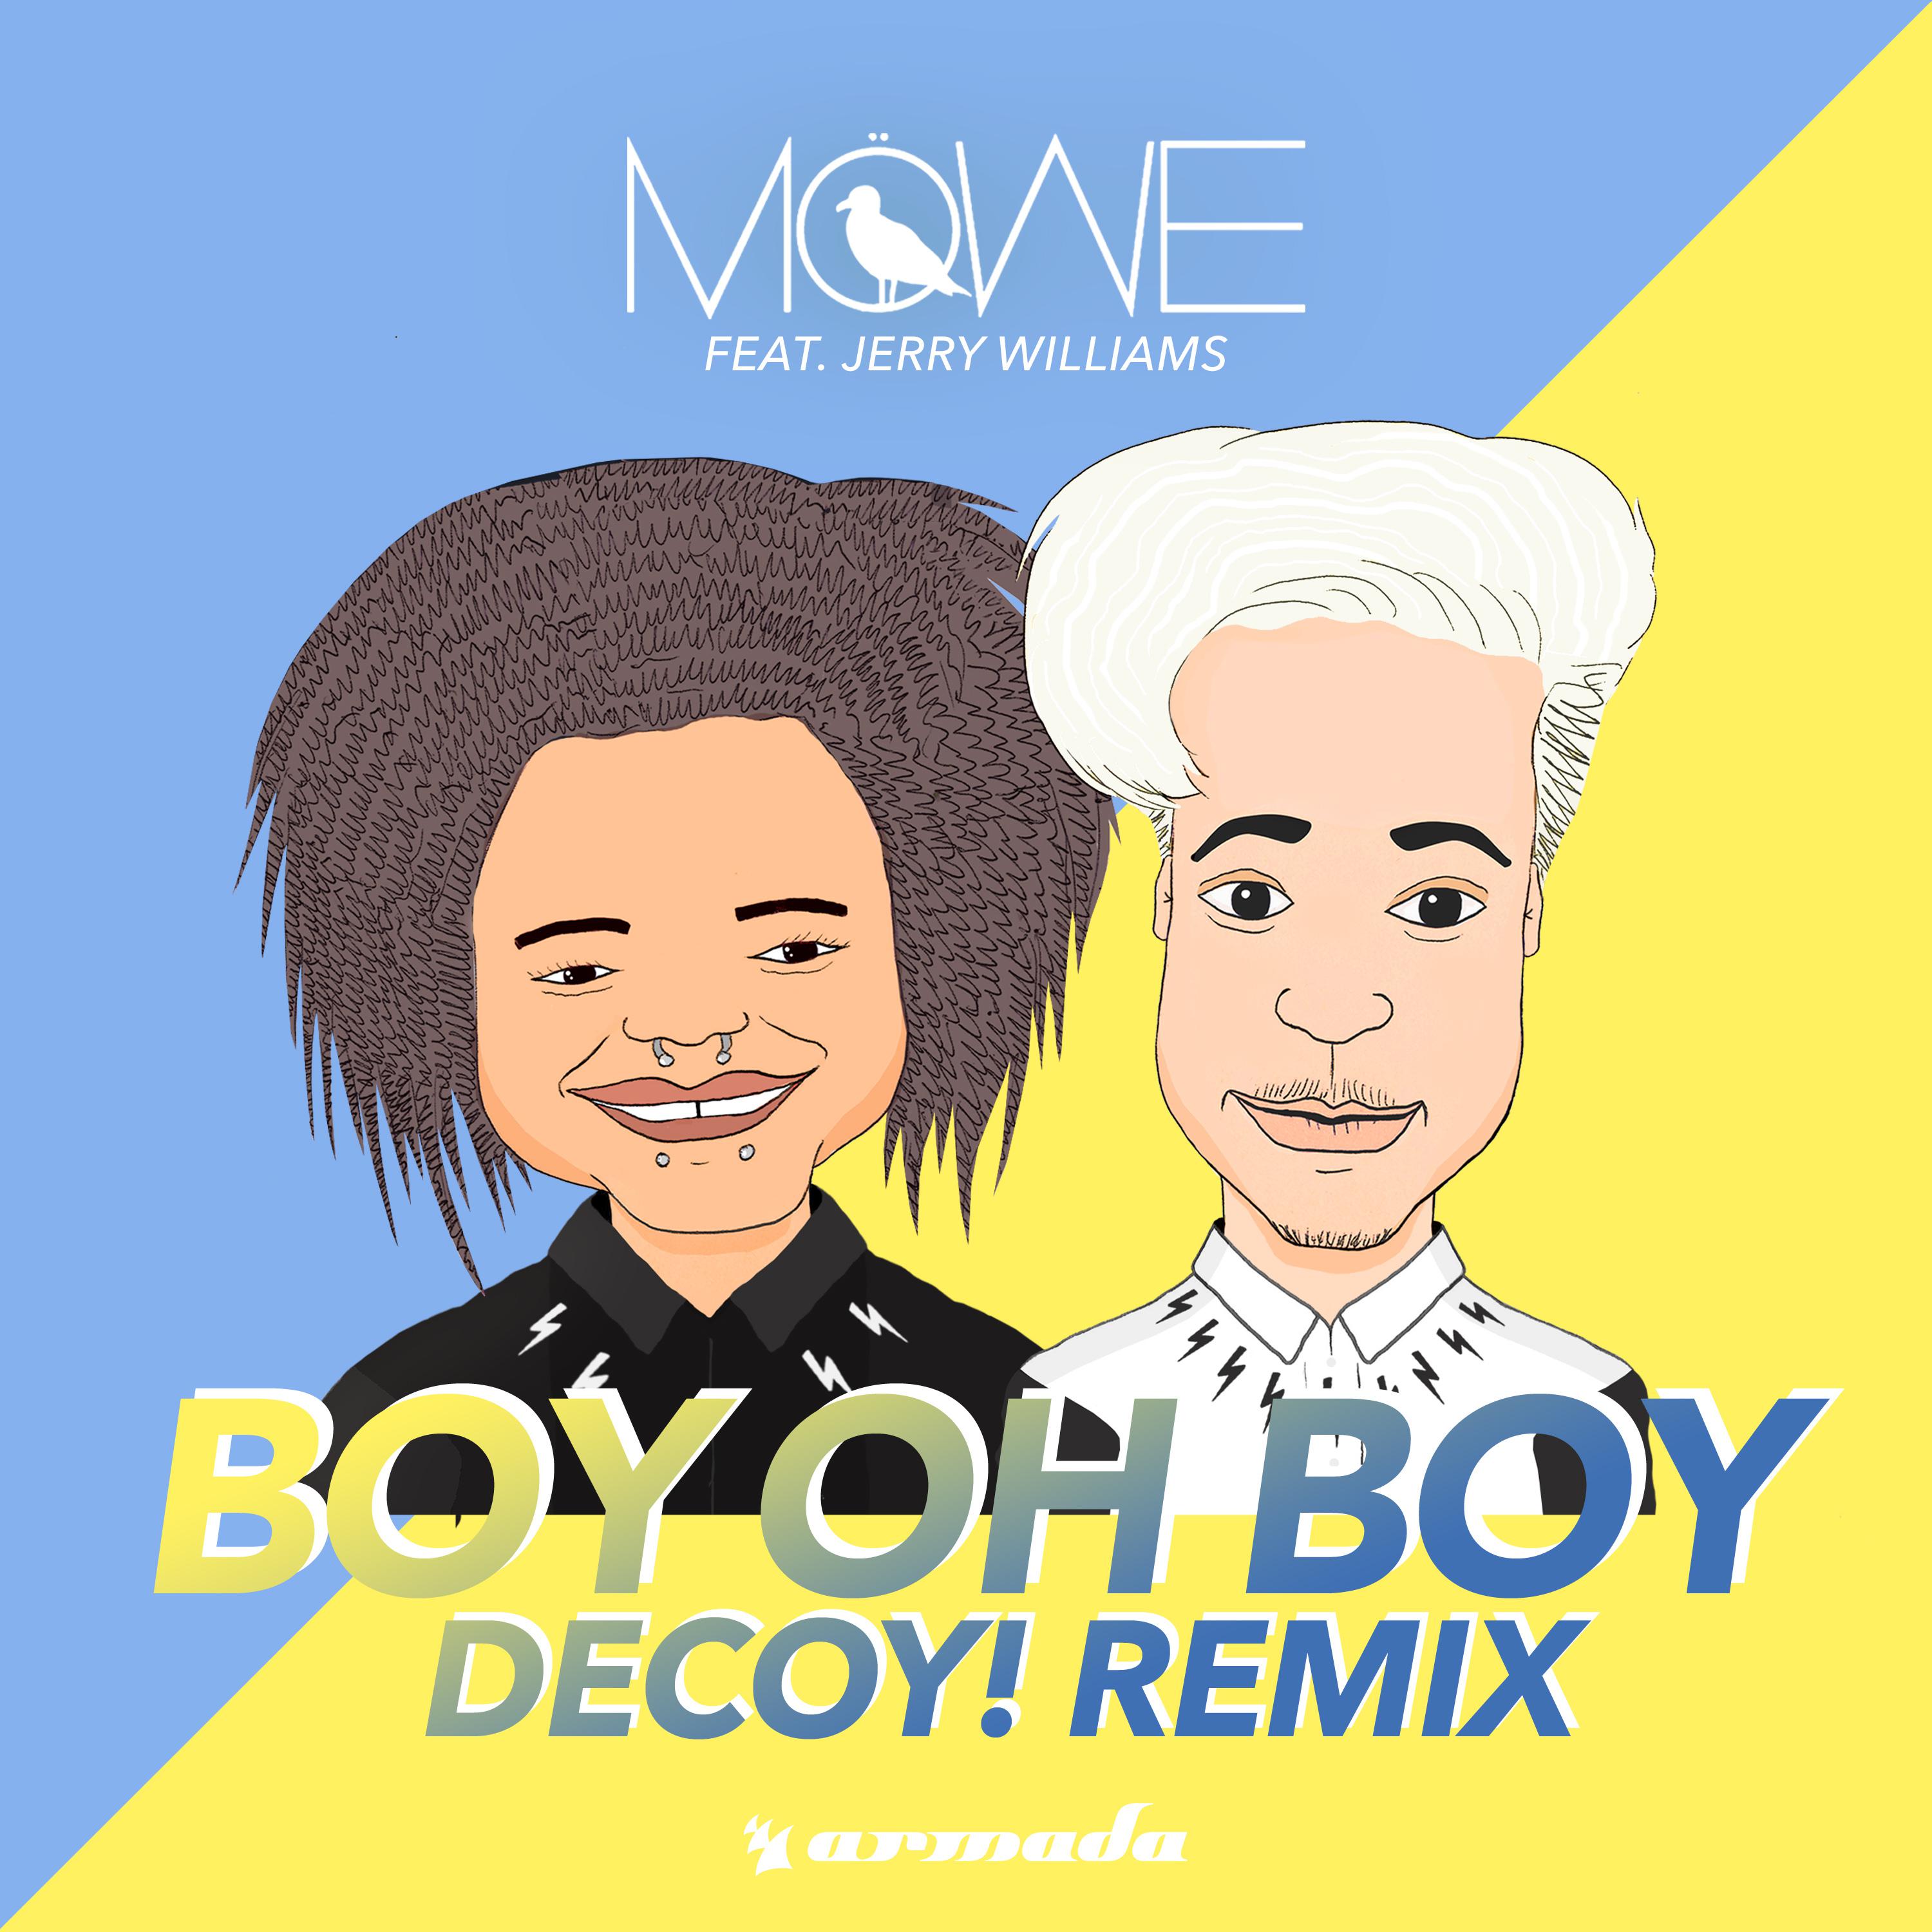 Boy Oh Boy (Decoy! Remix)